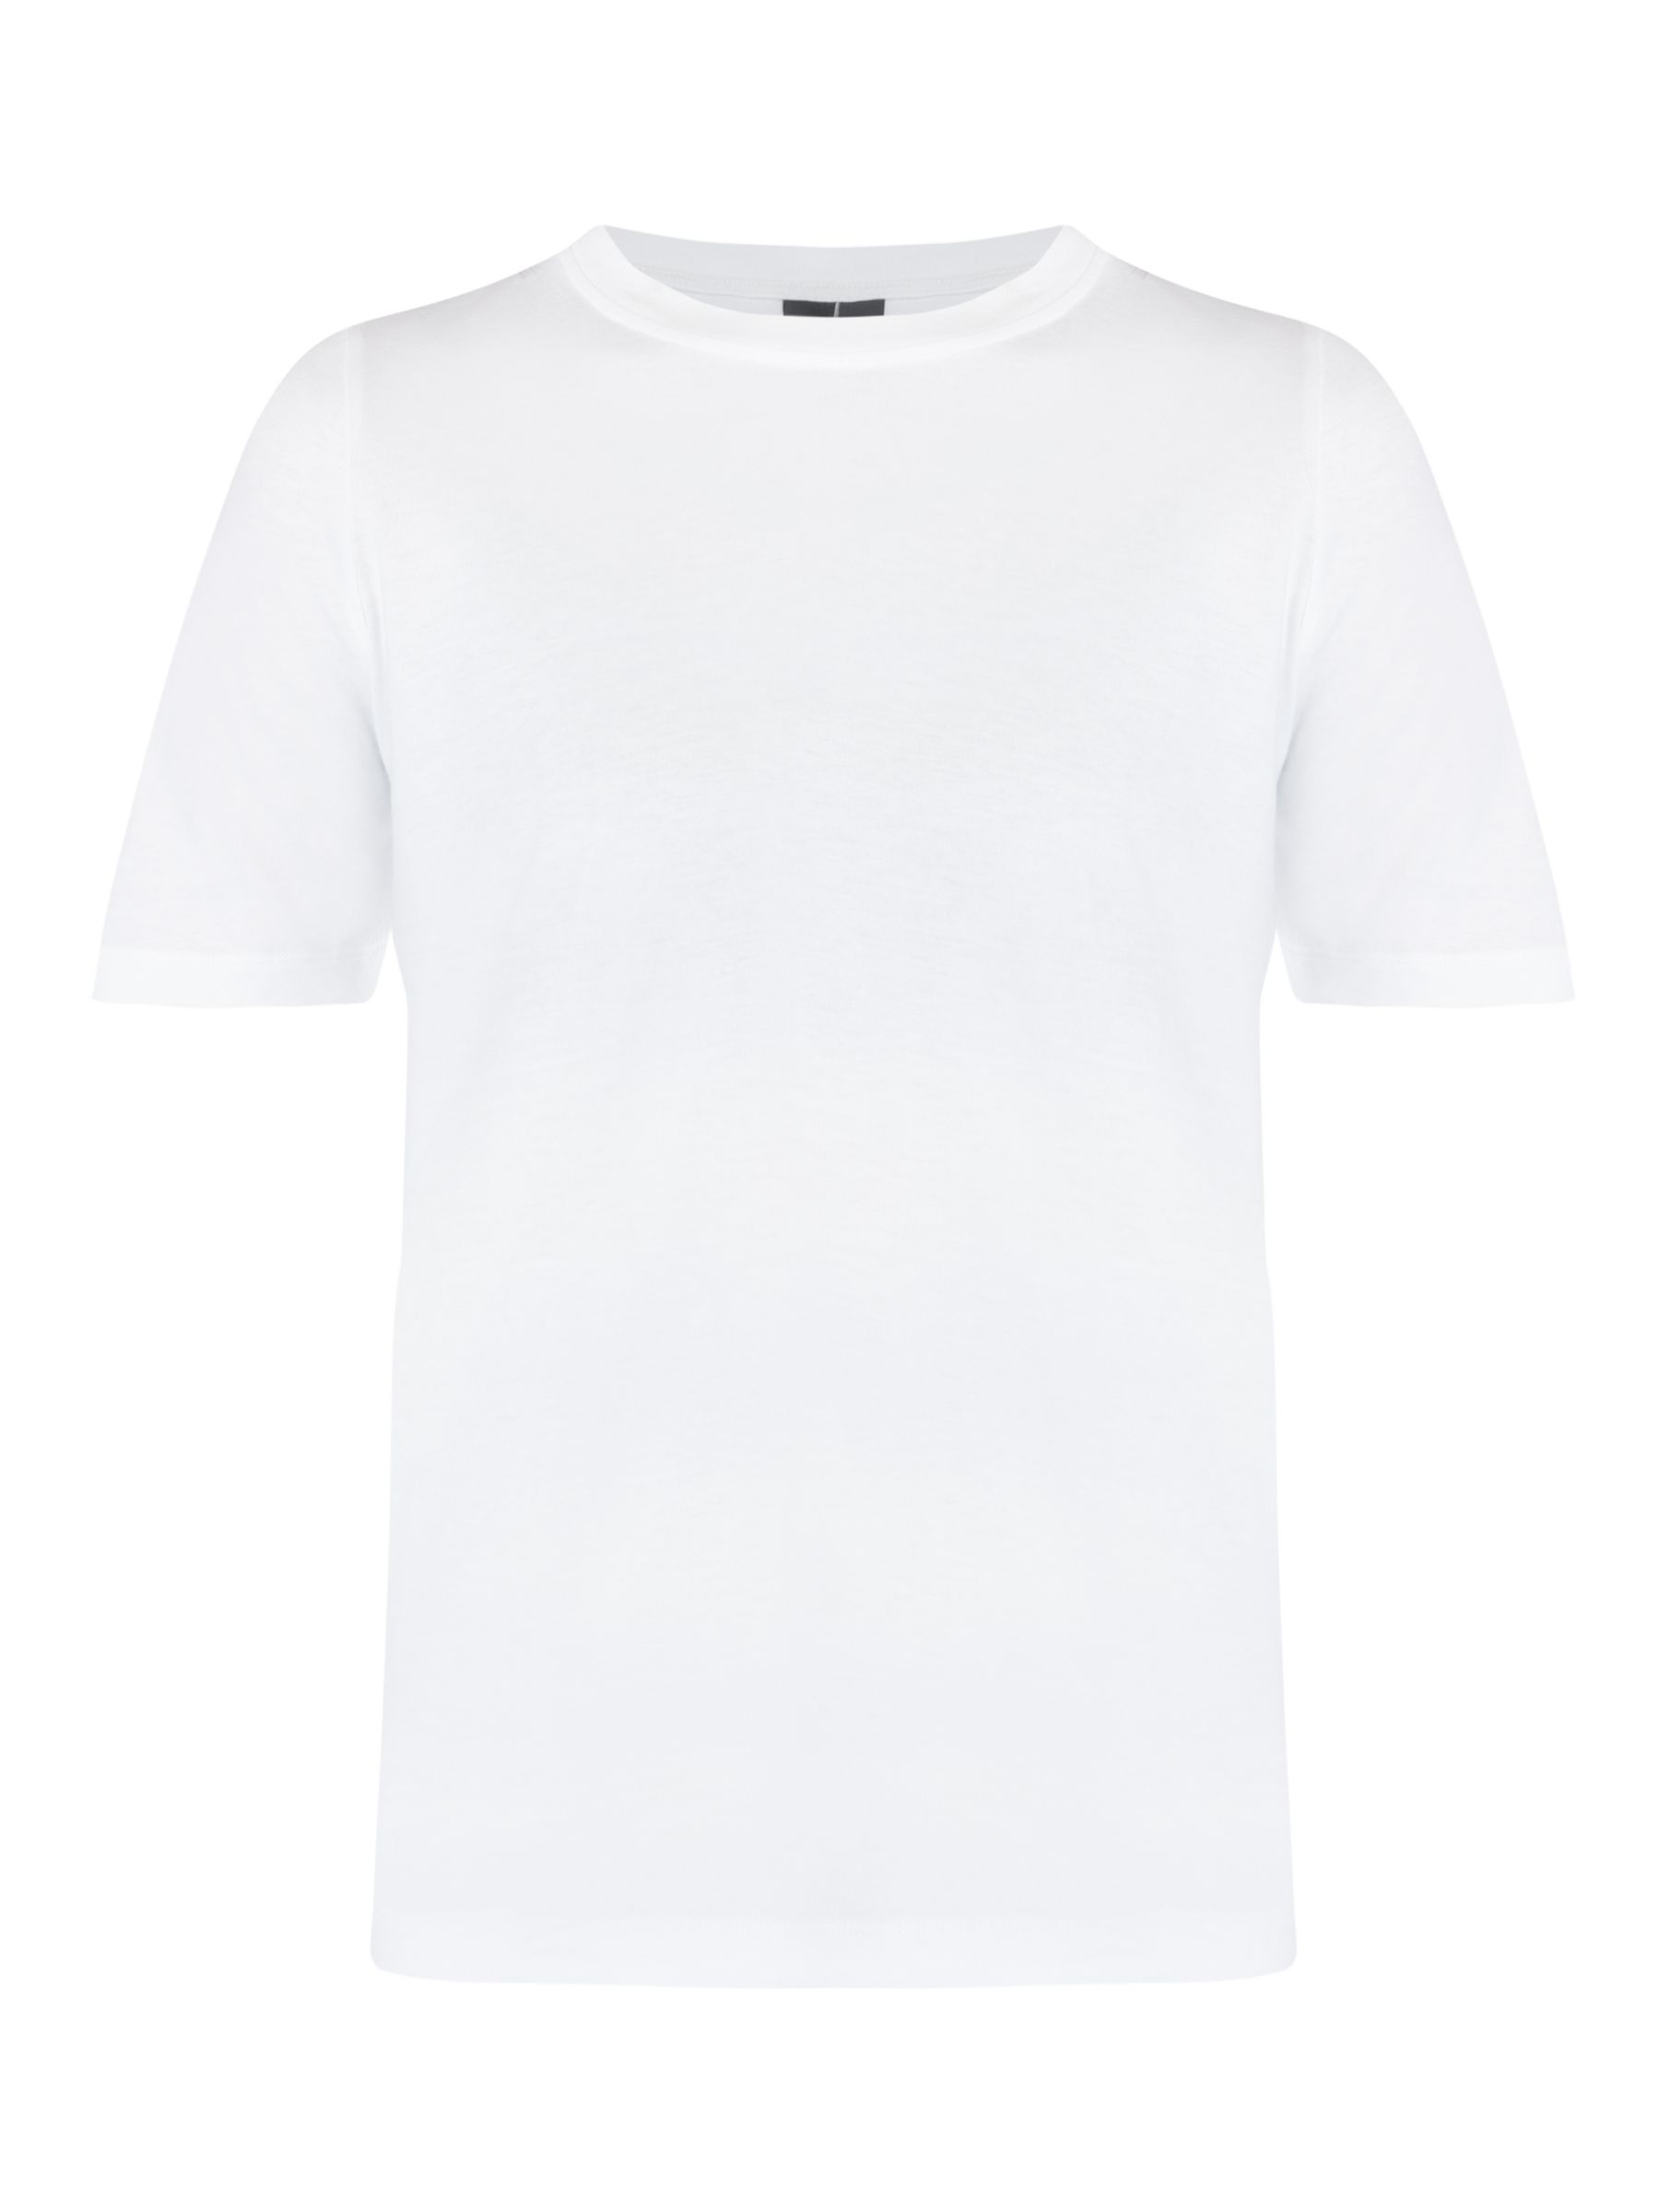 Sweaty Betty Essential Crew Neck T-Shirt, White at John Lewis & Partners